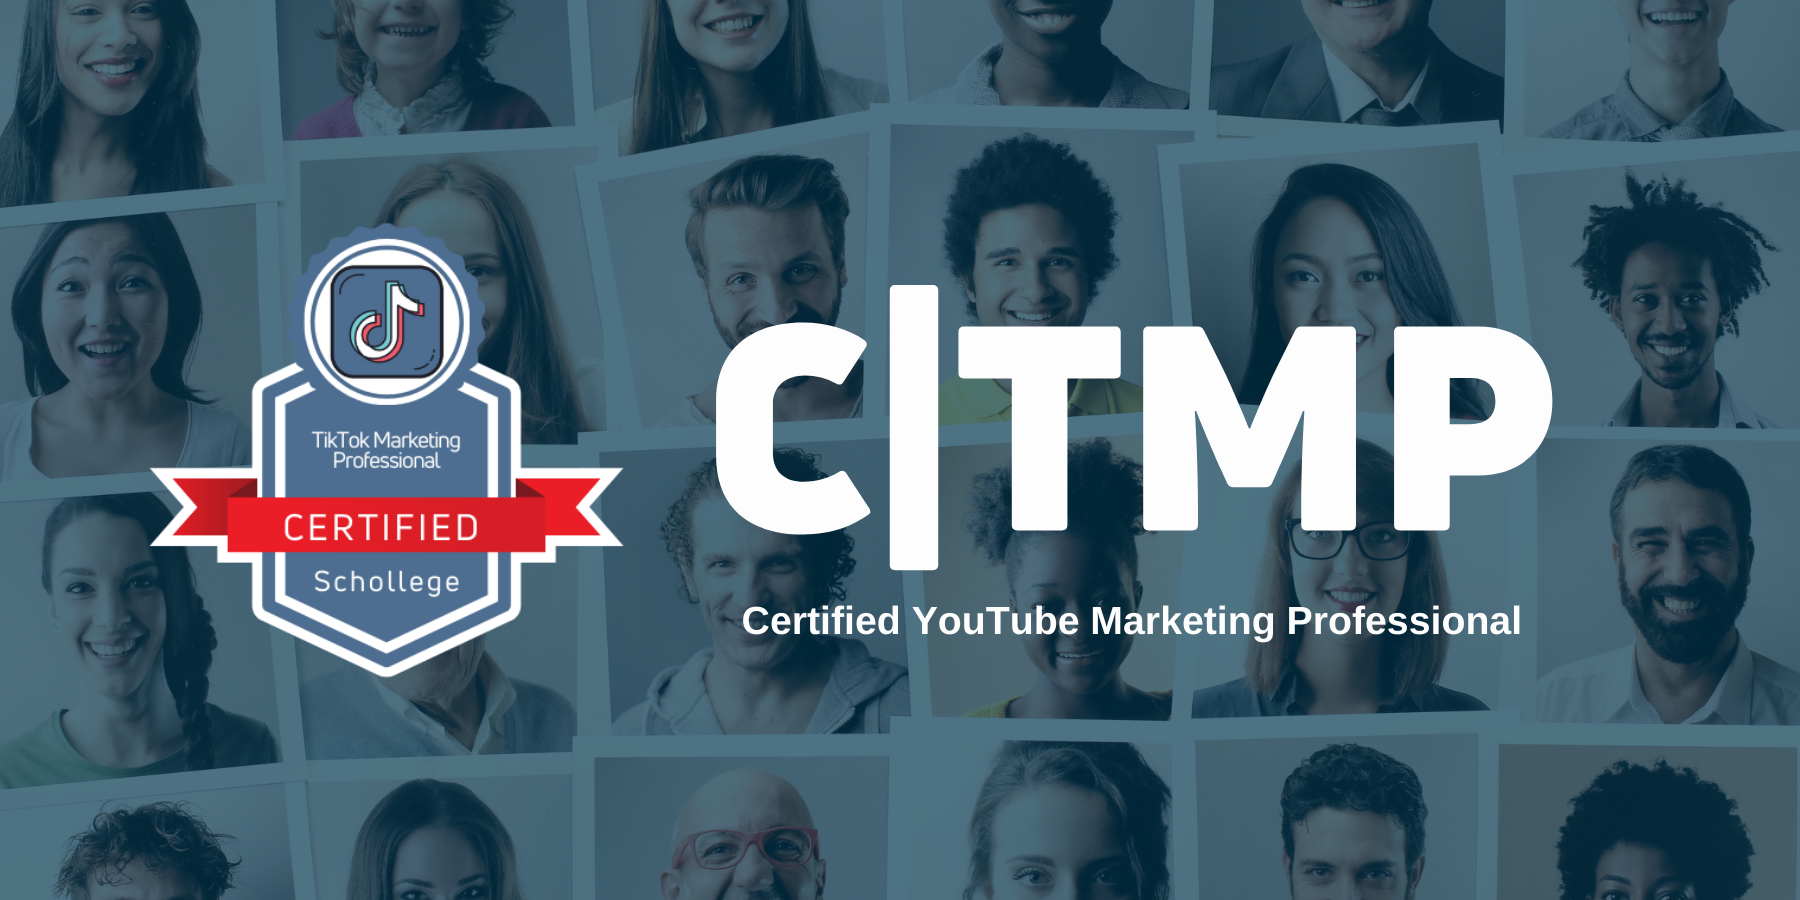 Certified TikTok Marketing Professional